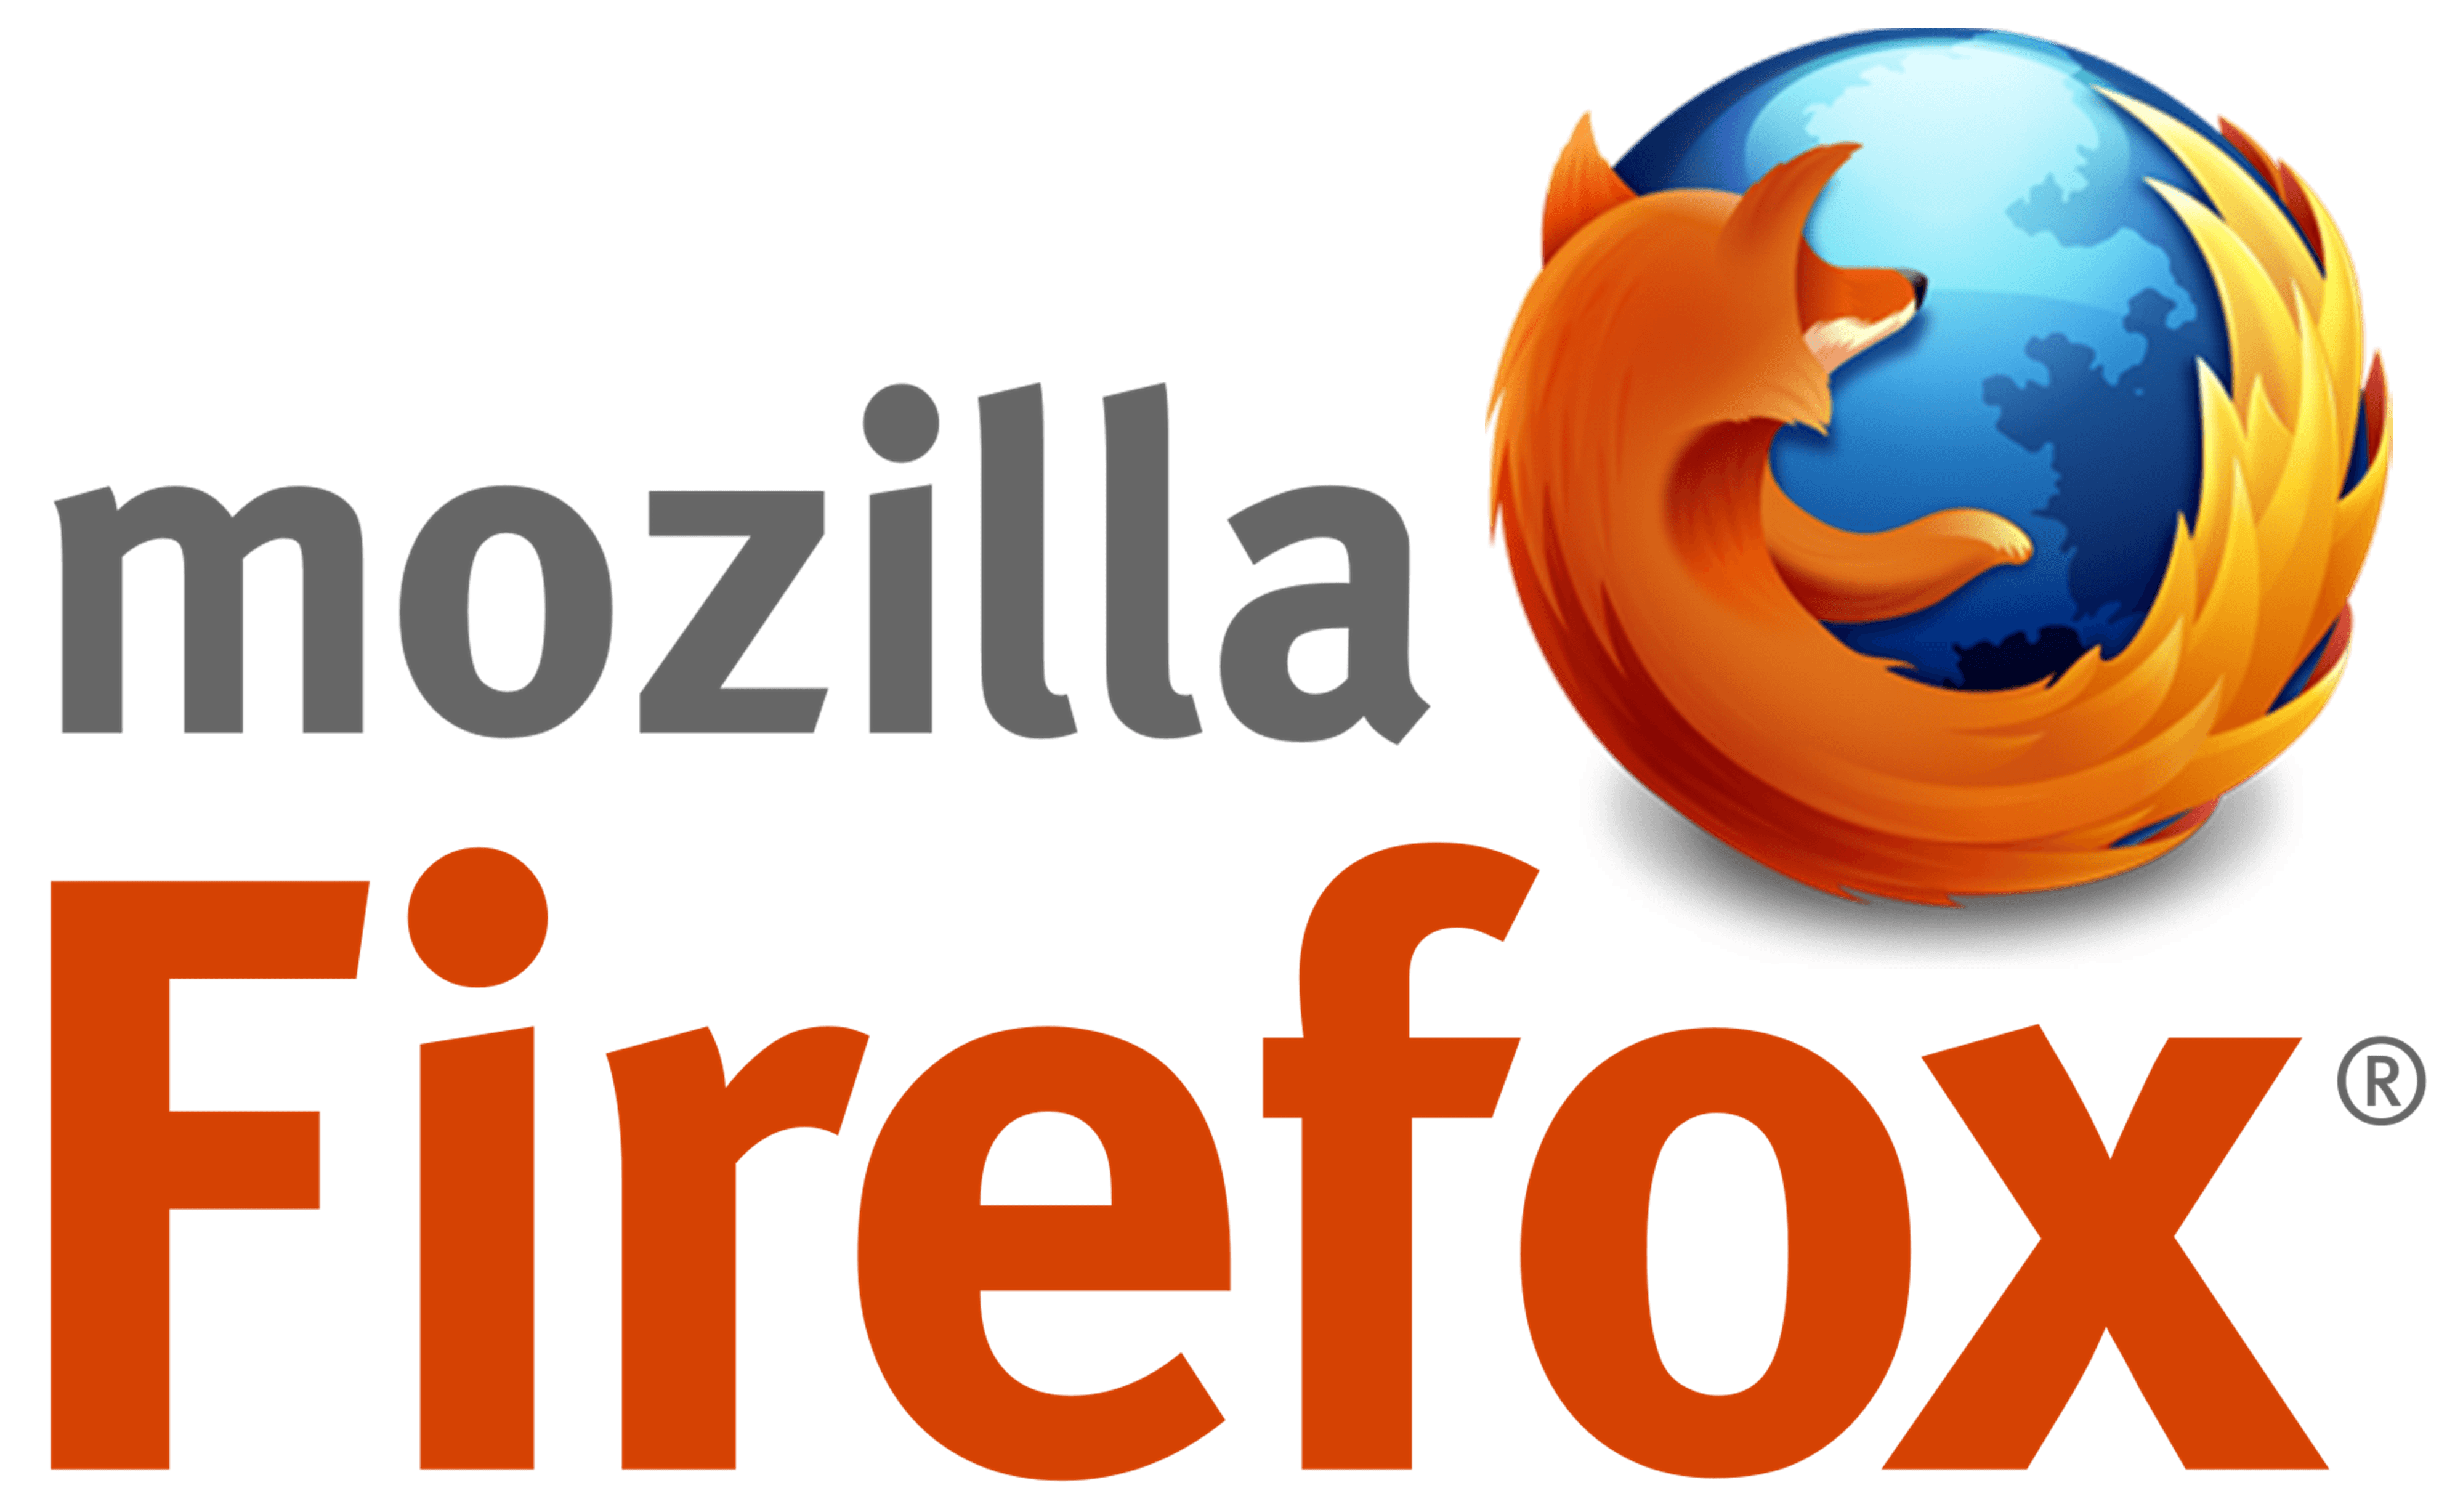 Original Firefox Logo - File:Firefox Logo.png - Wikimedia Commons